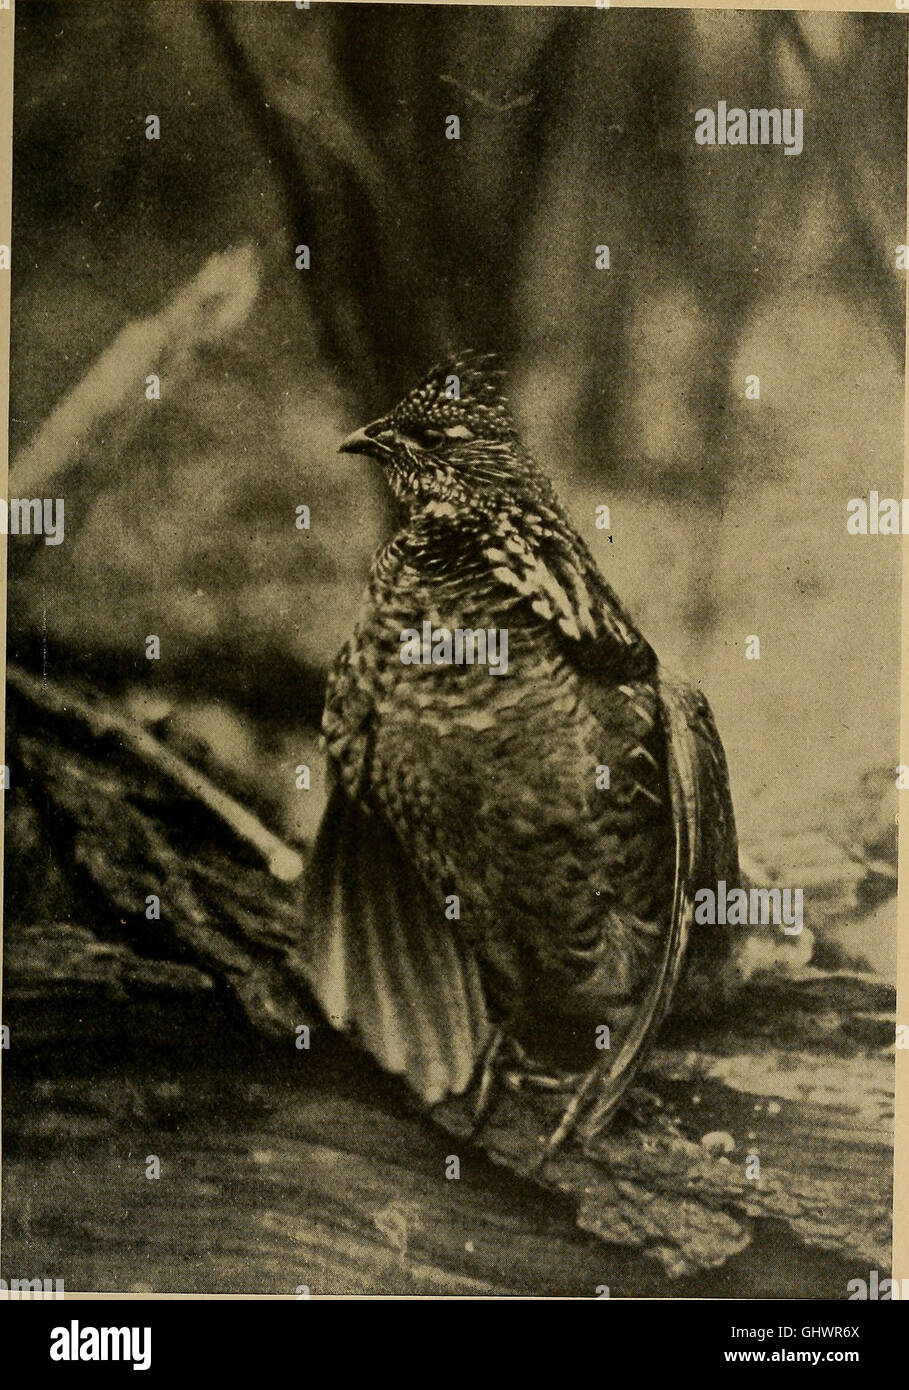 Bird lore (1920) Stock Photo